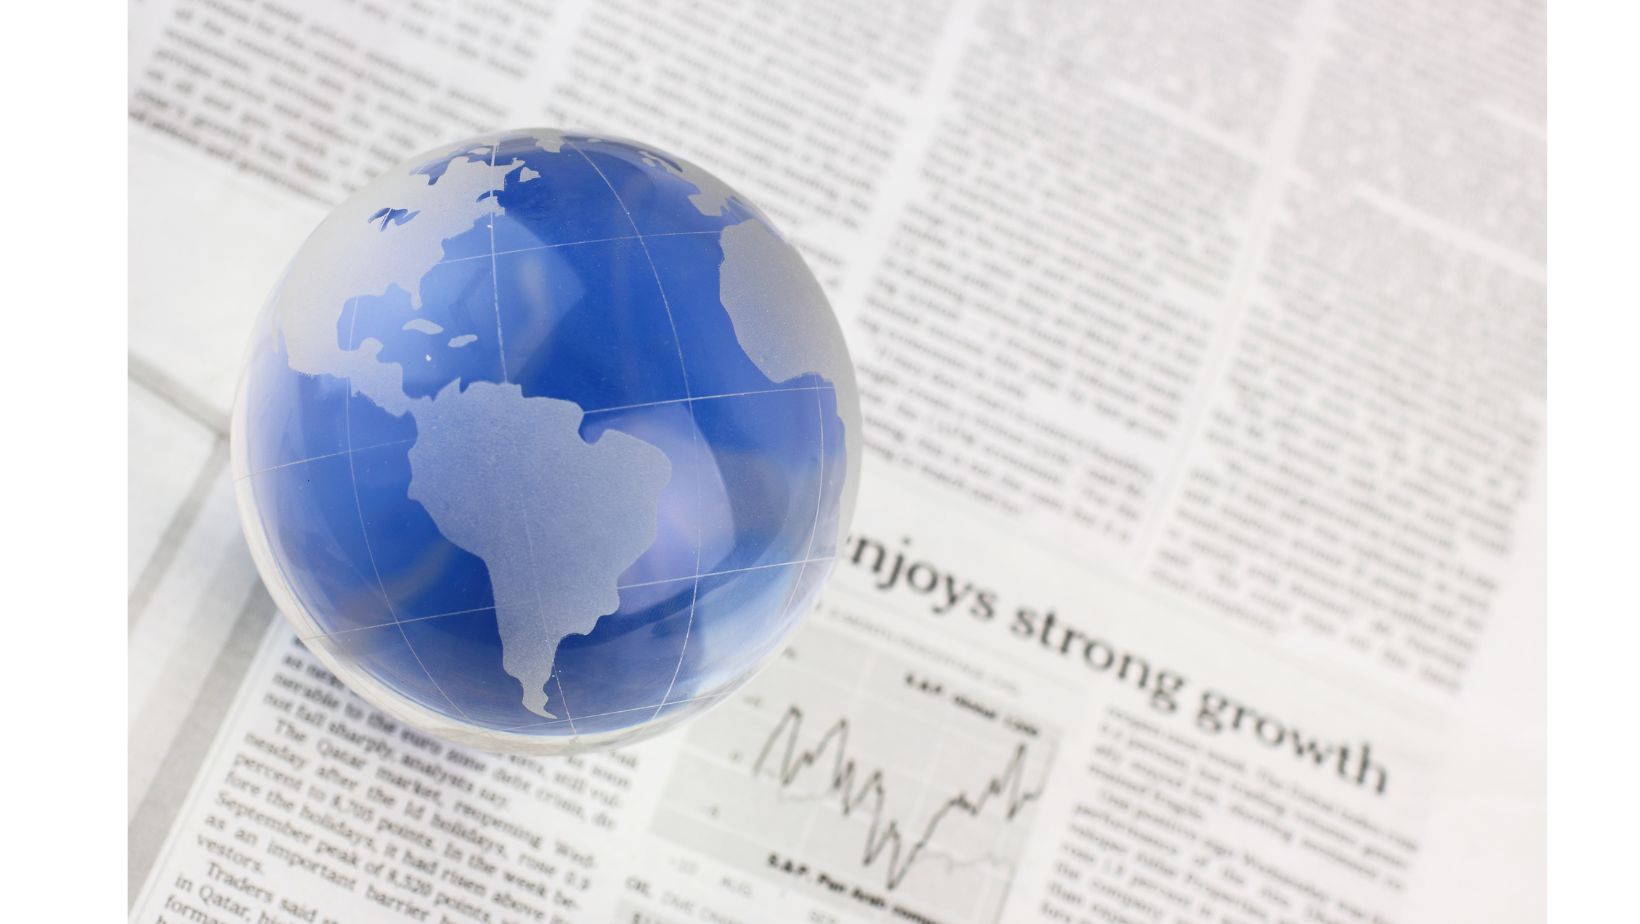 Glob dan penulisan akhbar tentang ekonomi 